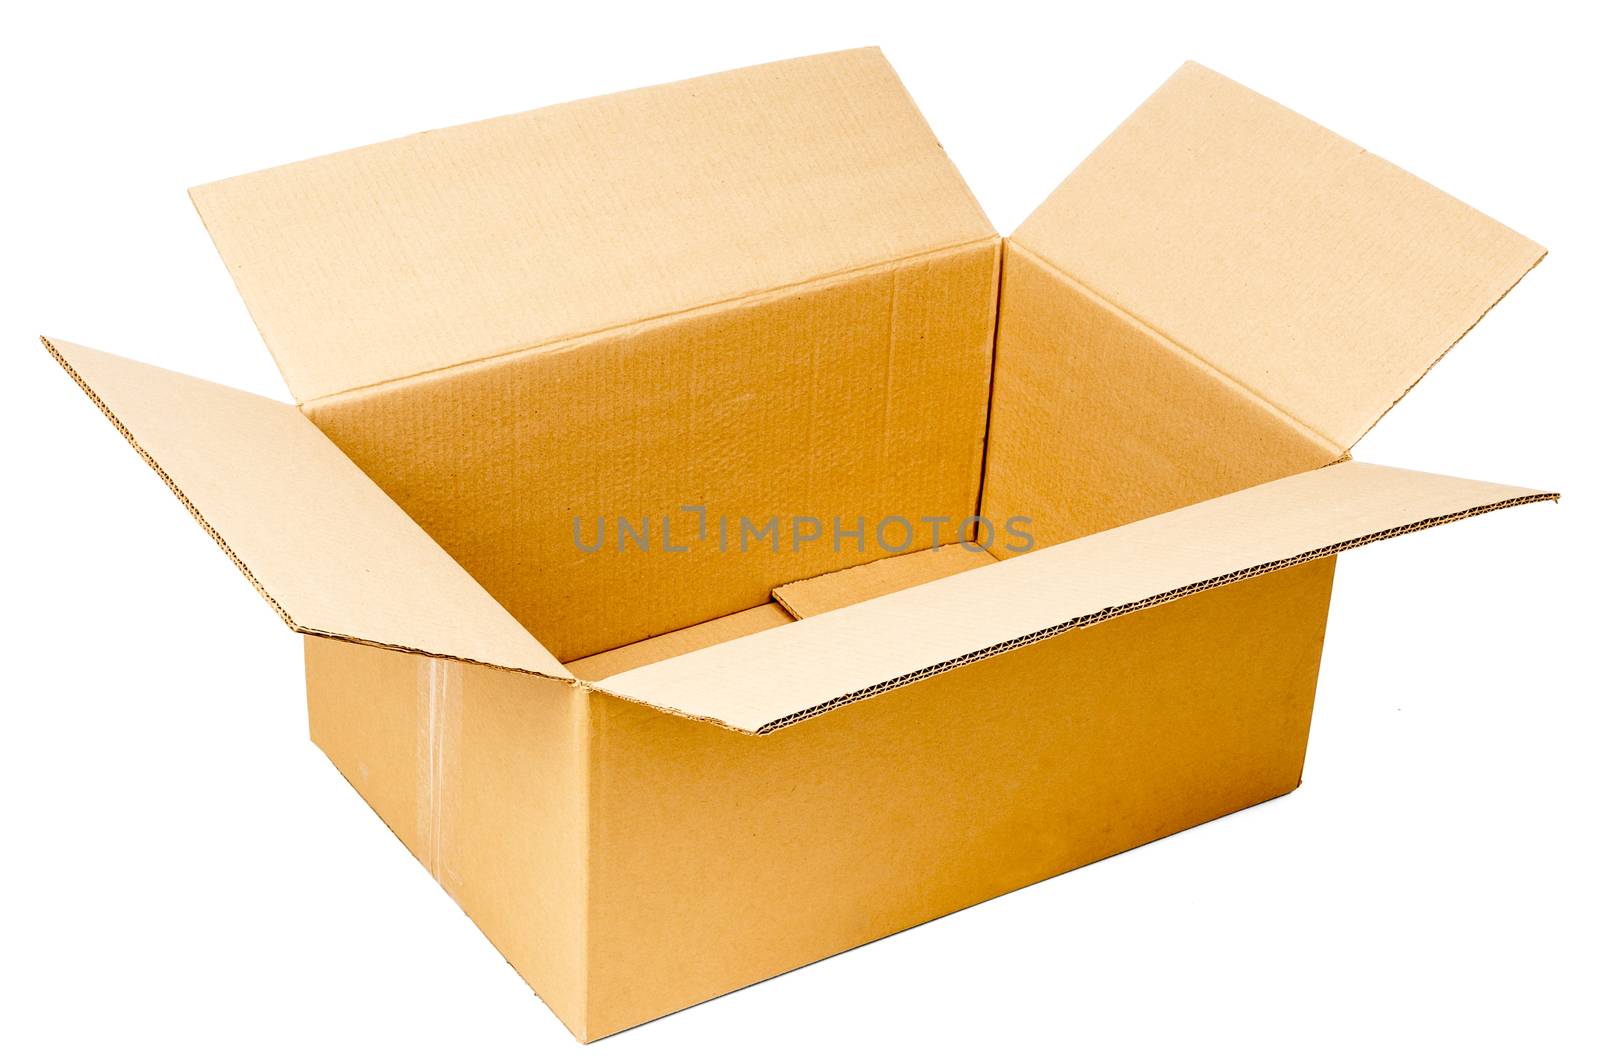 Opened cardboard box by cherezoff